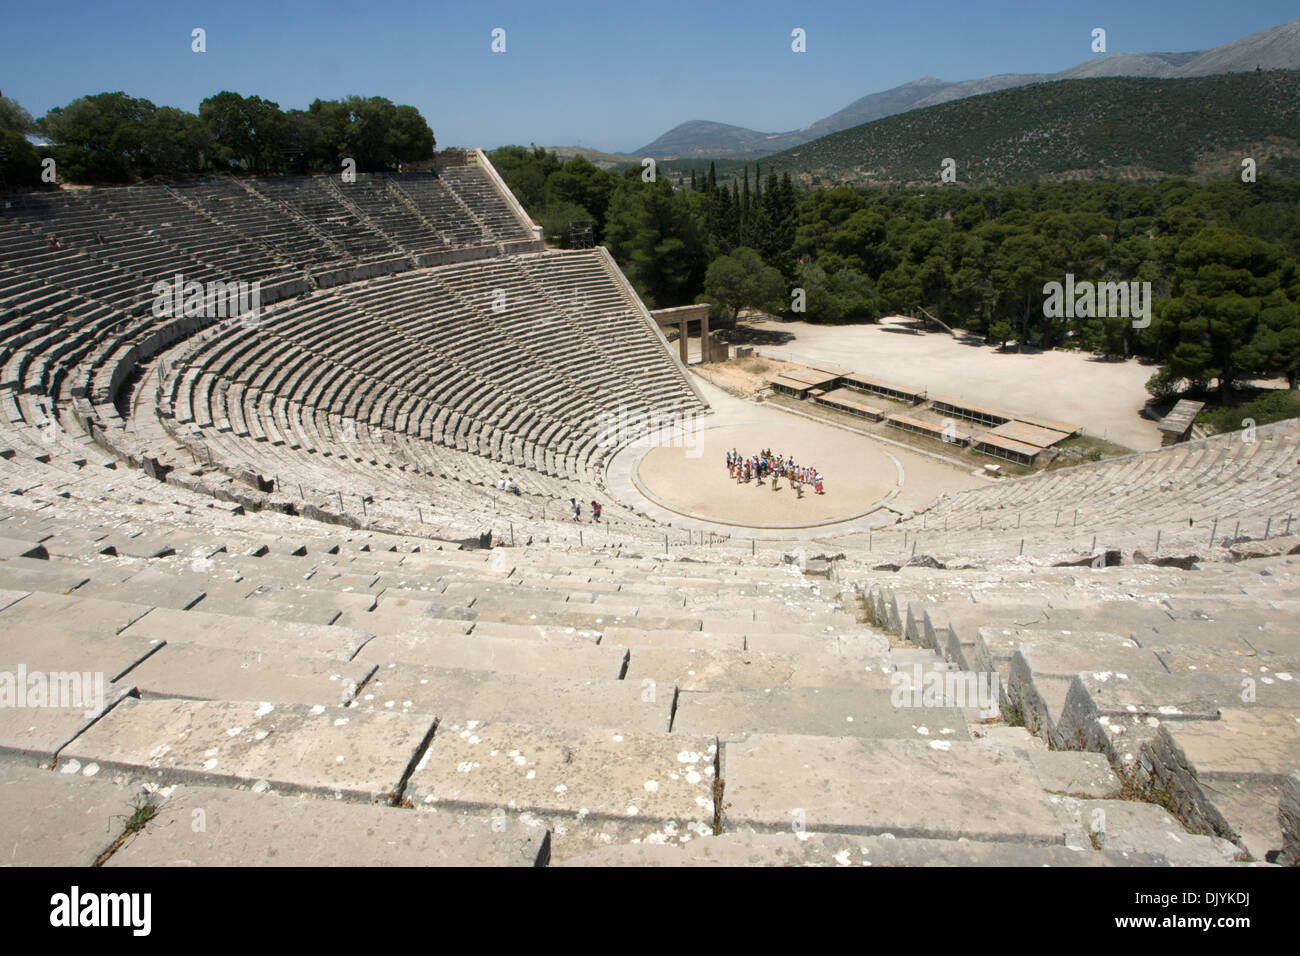 A antic theater in Epidaurus, Peloponnese Greece Stock Photo